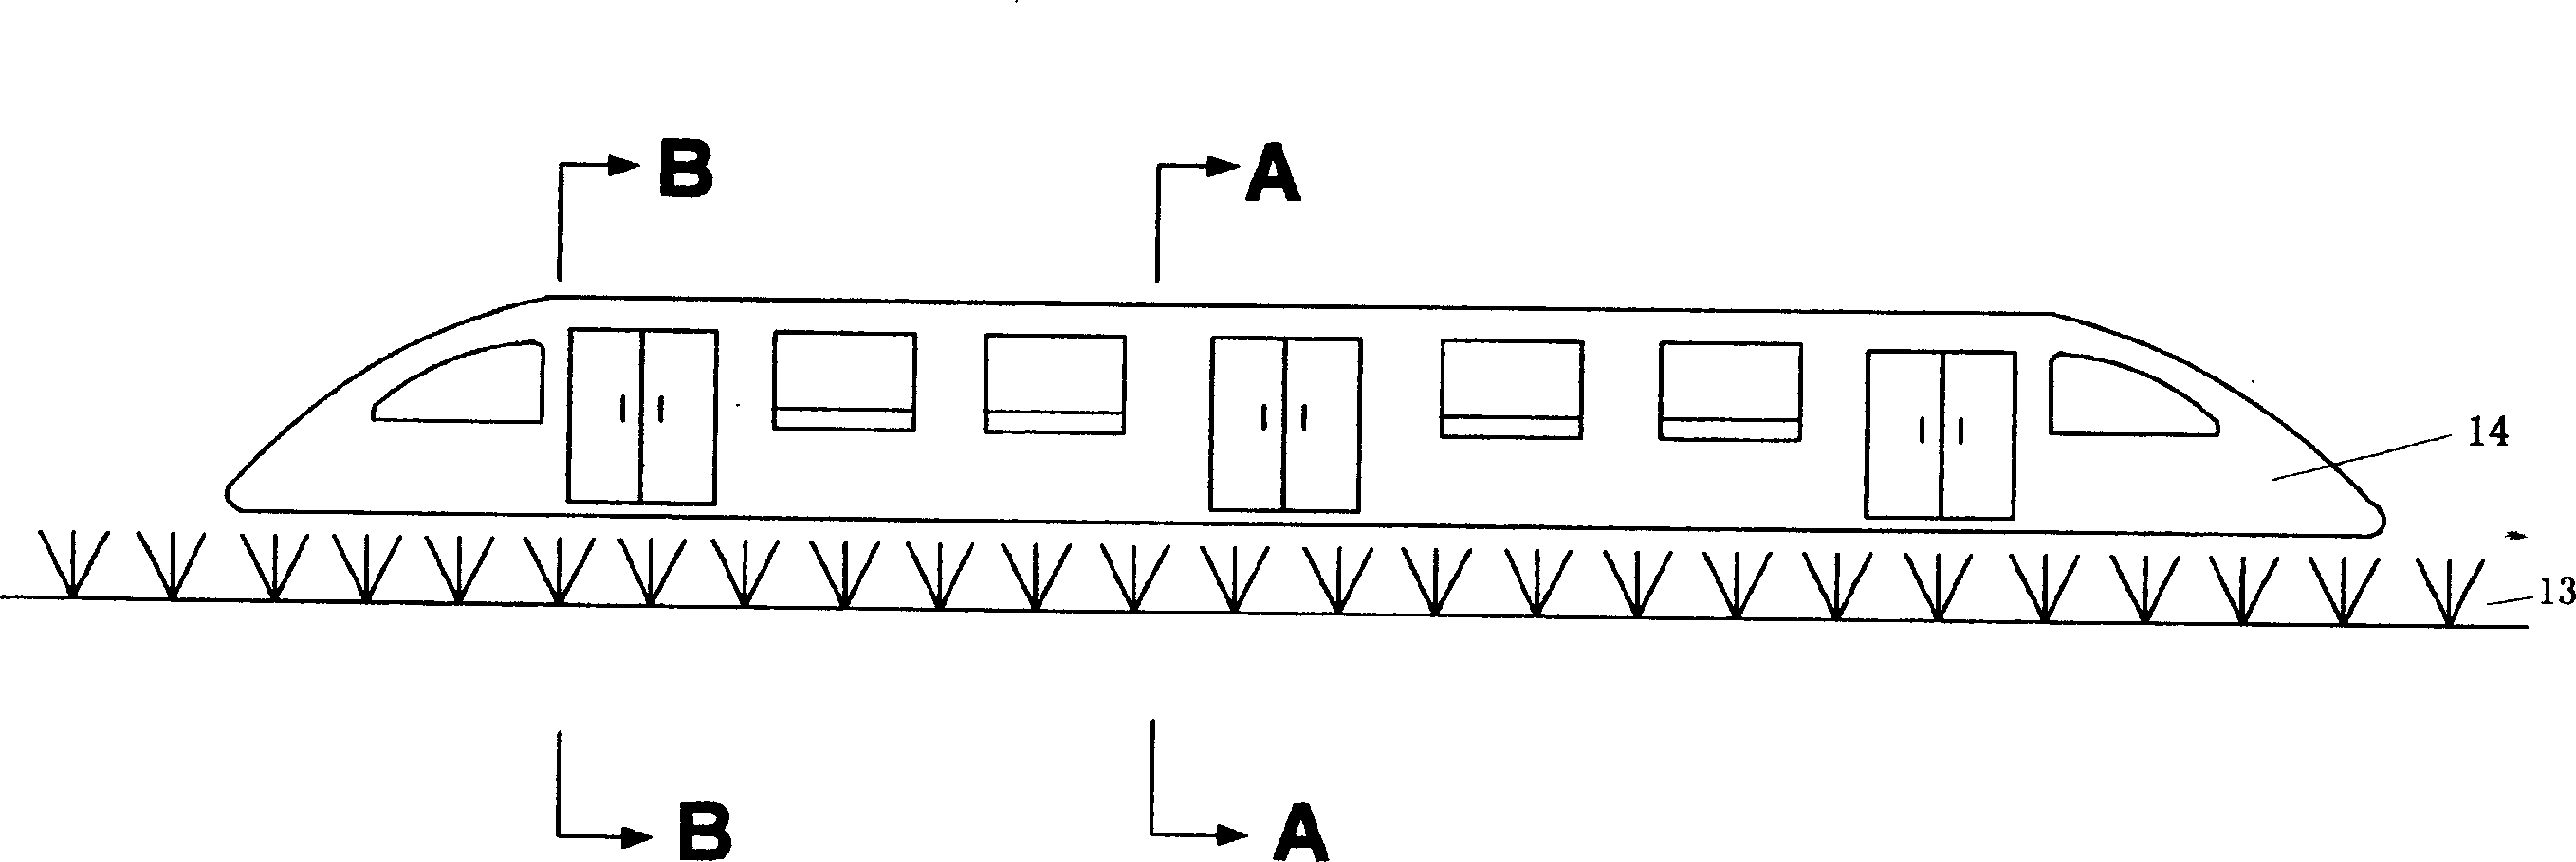 Concealed rail permanent magnet compensation type suspension railway-train system